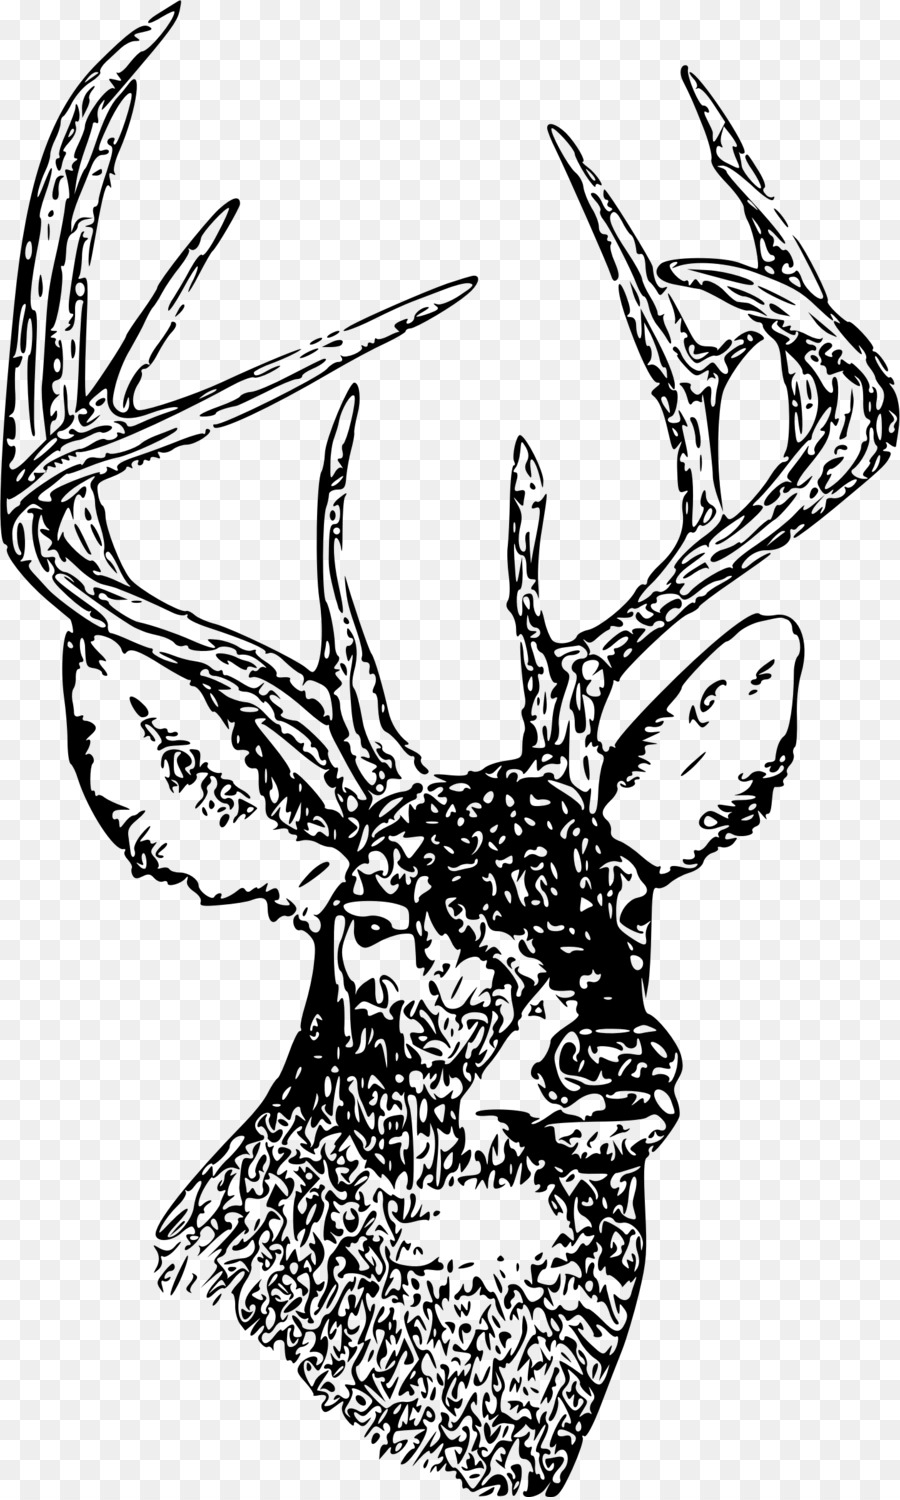 White-tailed deer Moose Clip art - deer head png download - 1439*2394 - Free Transparent Deer png Download.